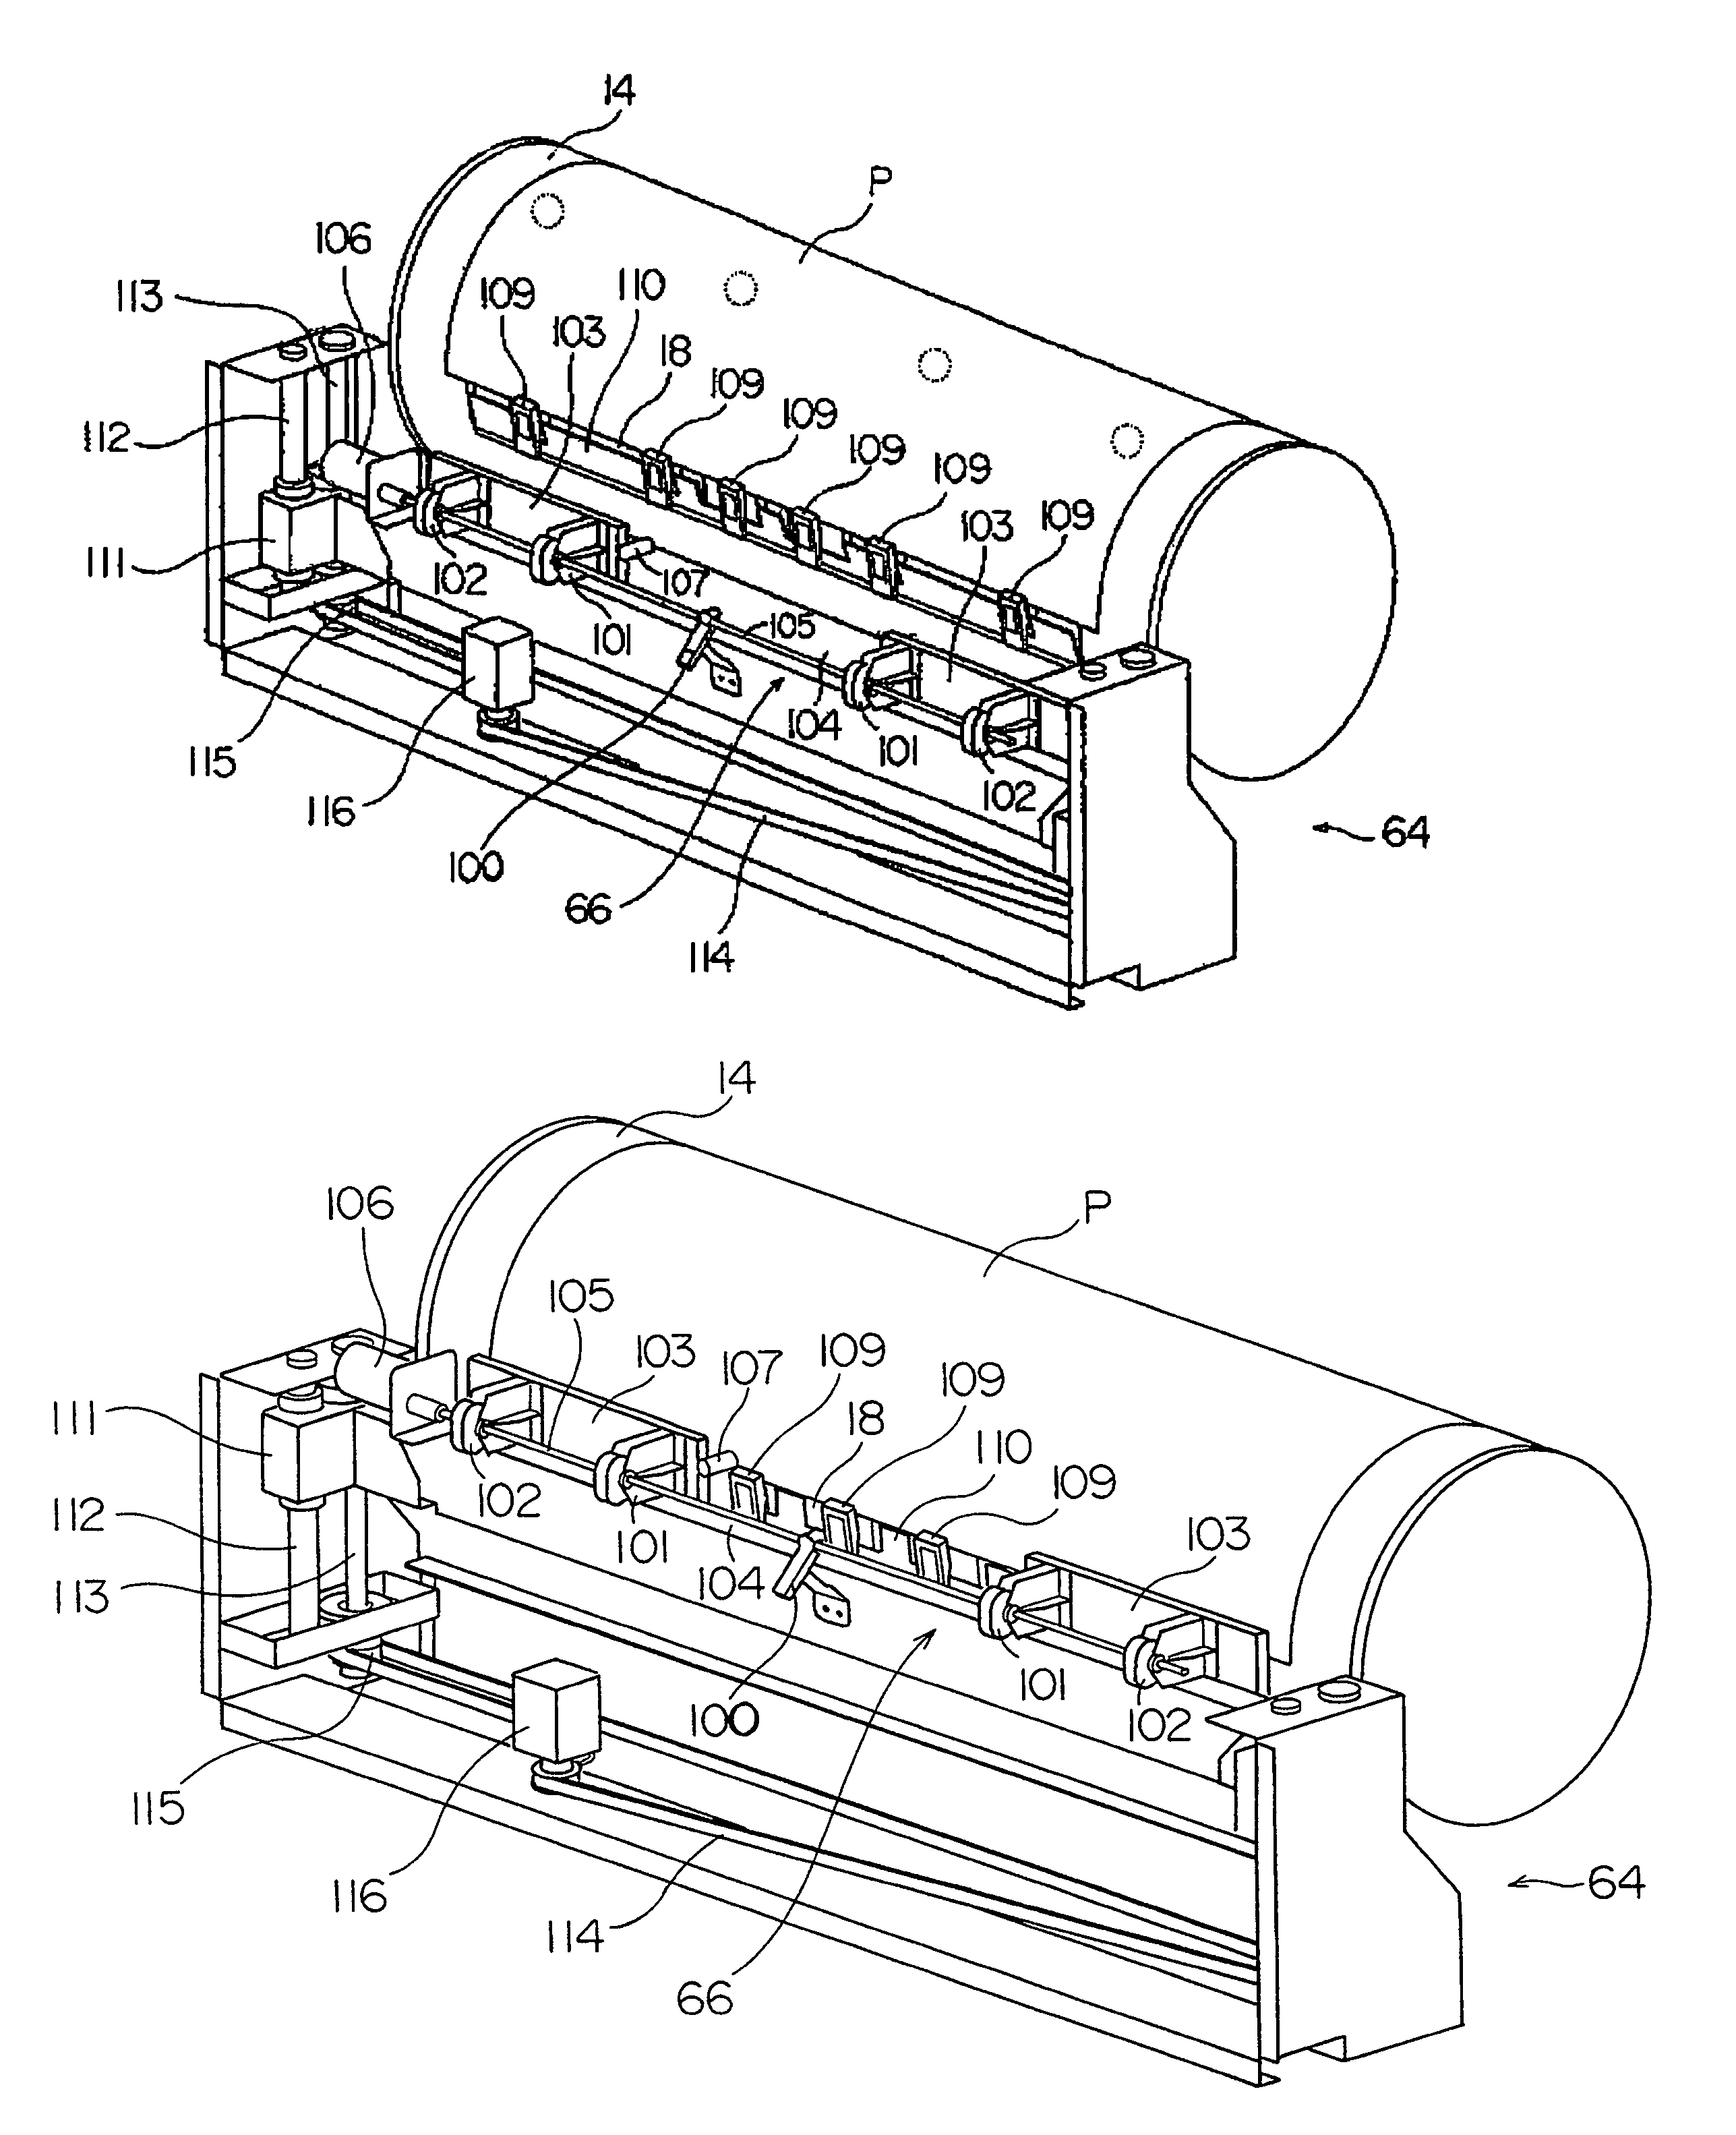 Image recording apparatus